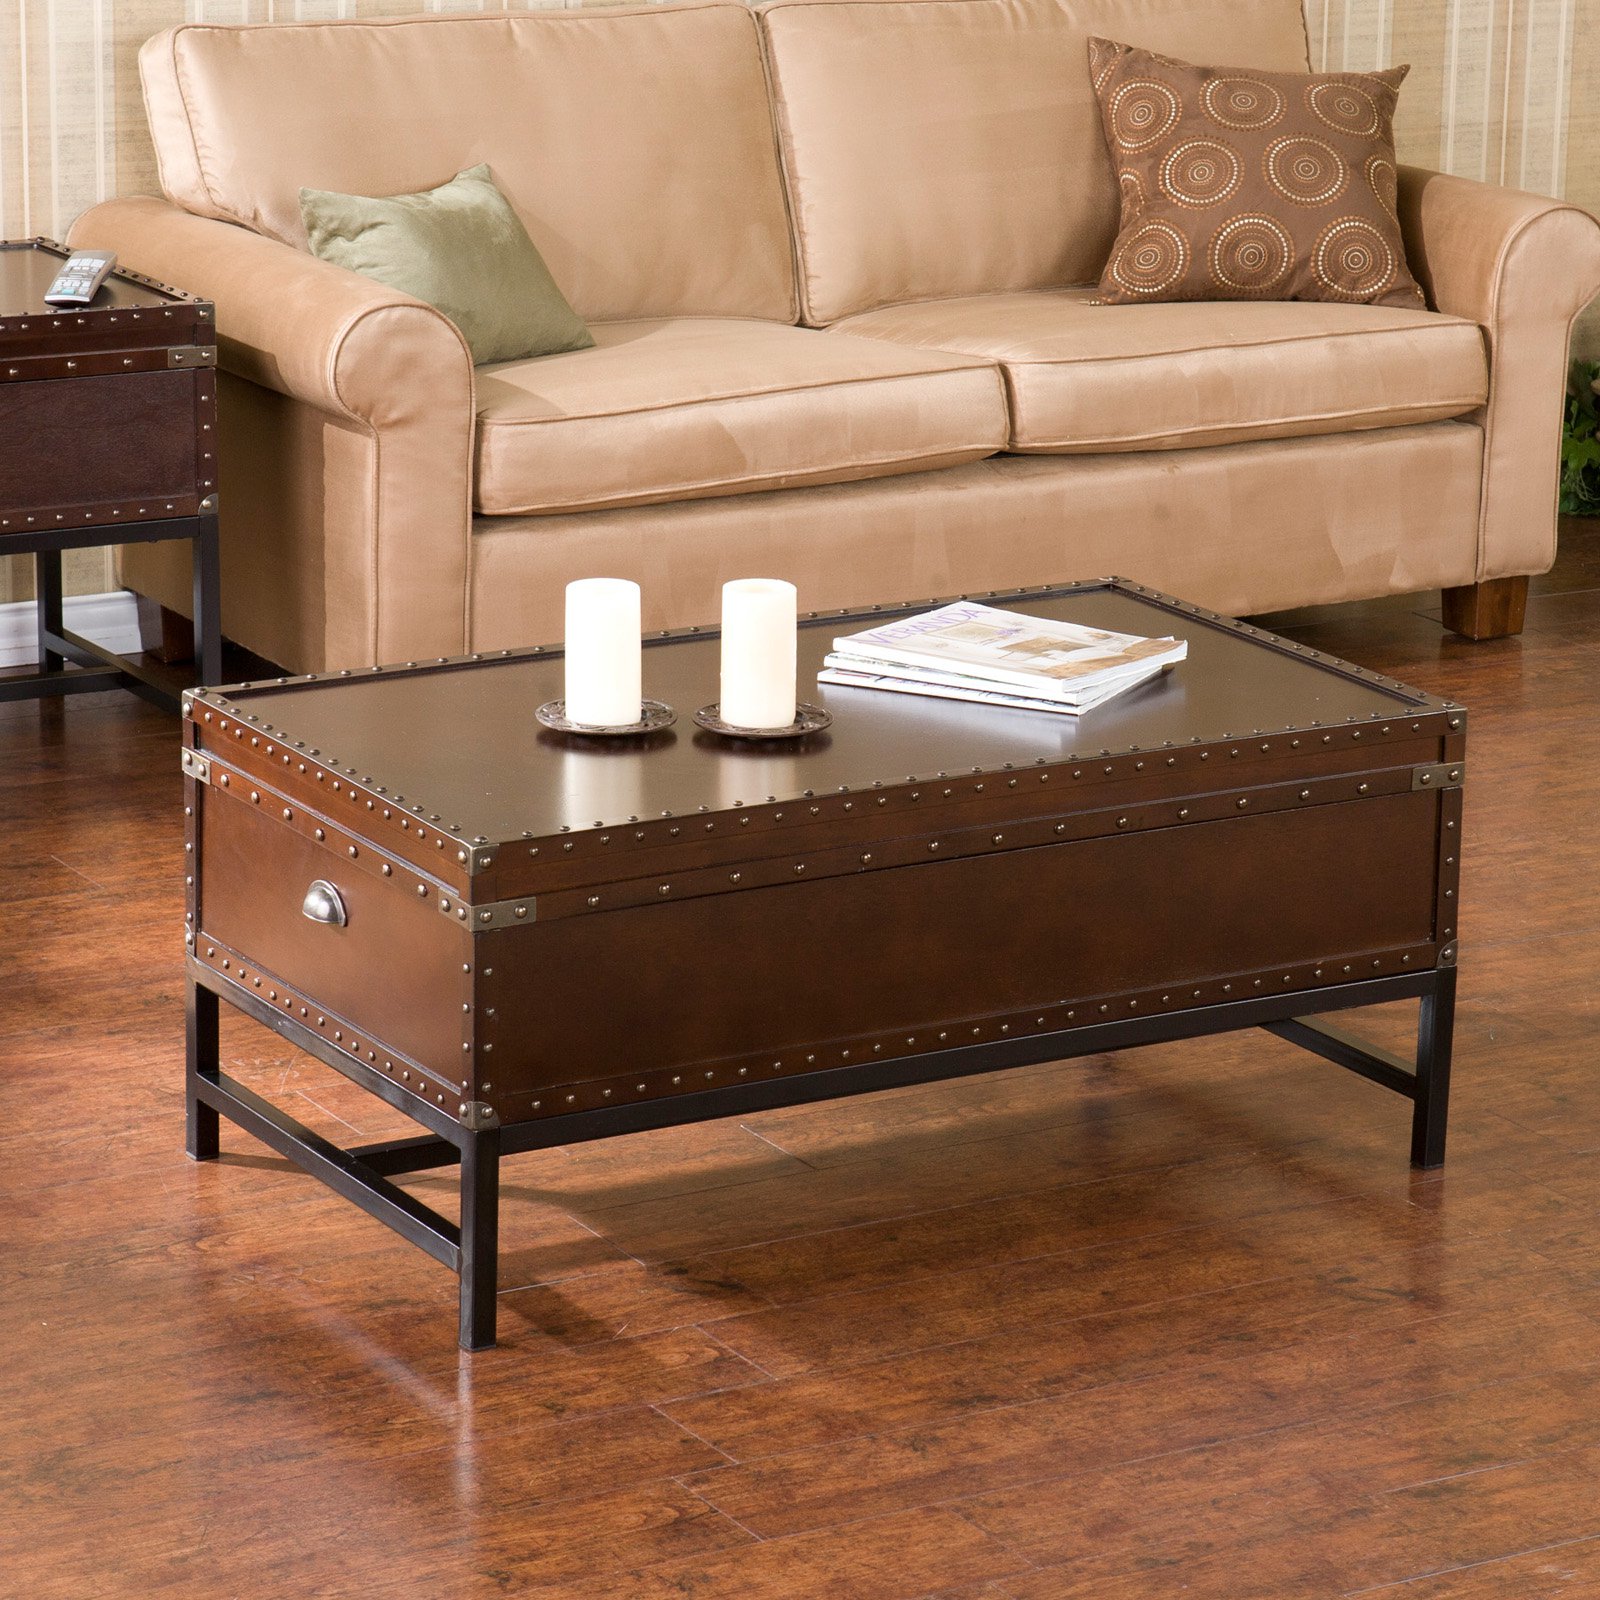 SEI Furniture Voyager Storage Coffee Table in Espresso - image 1 of 5